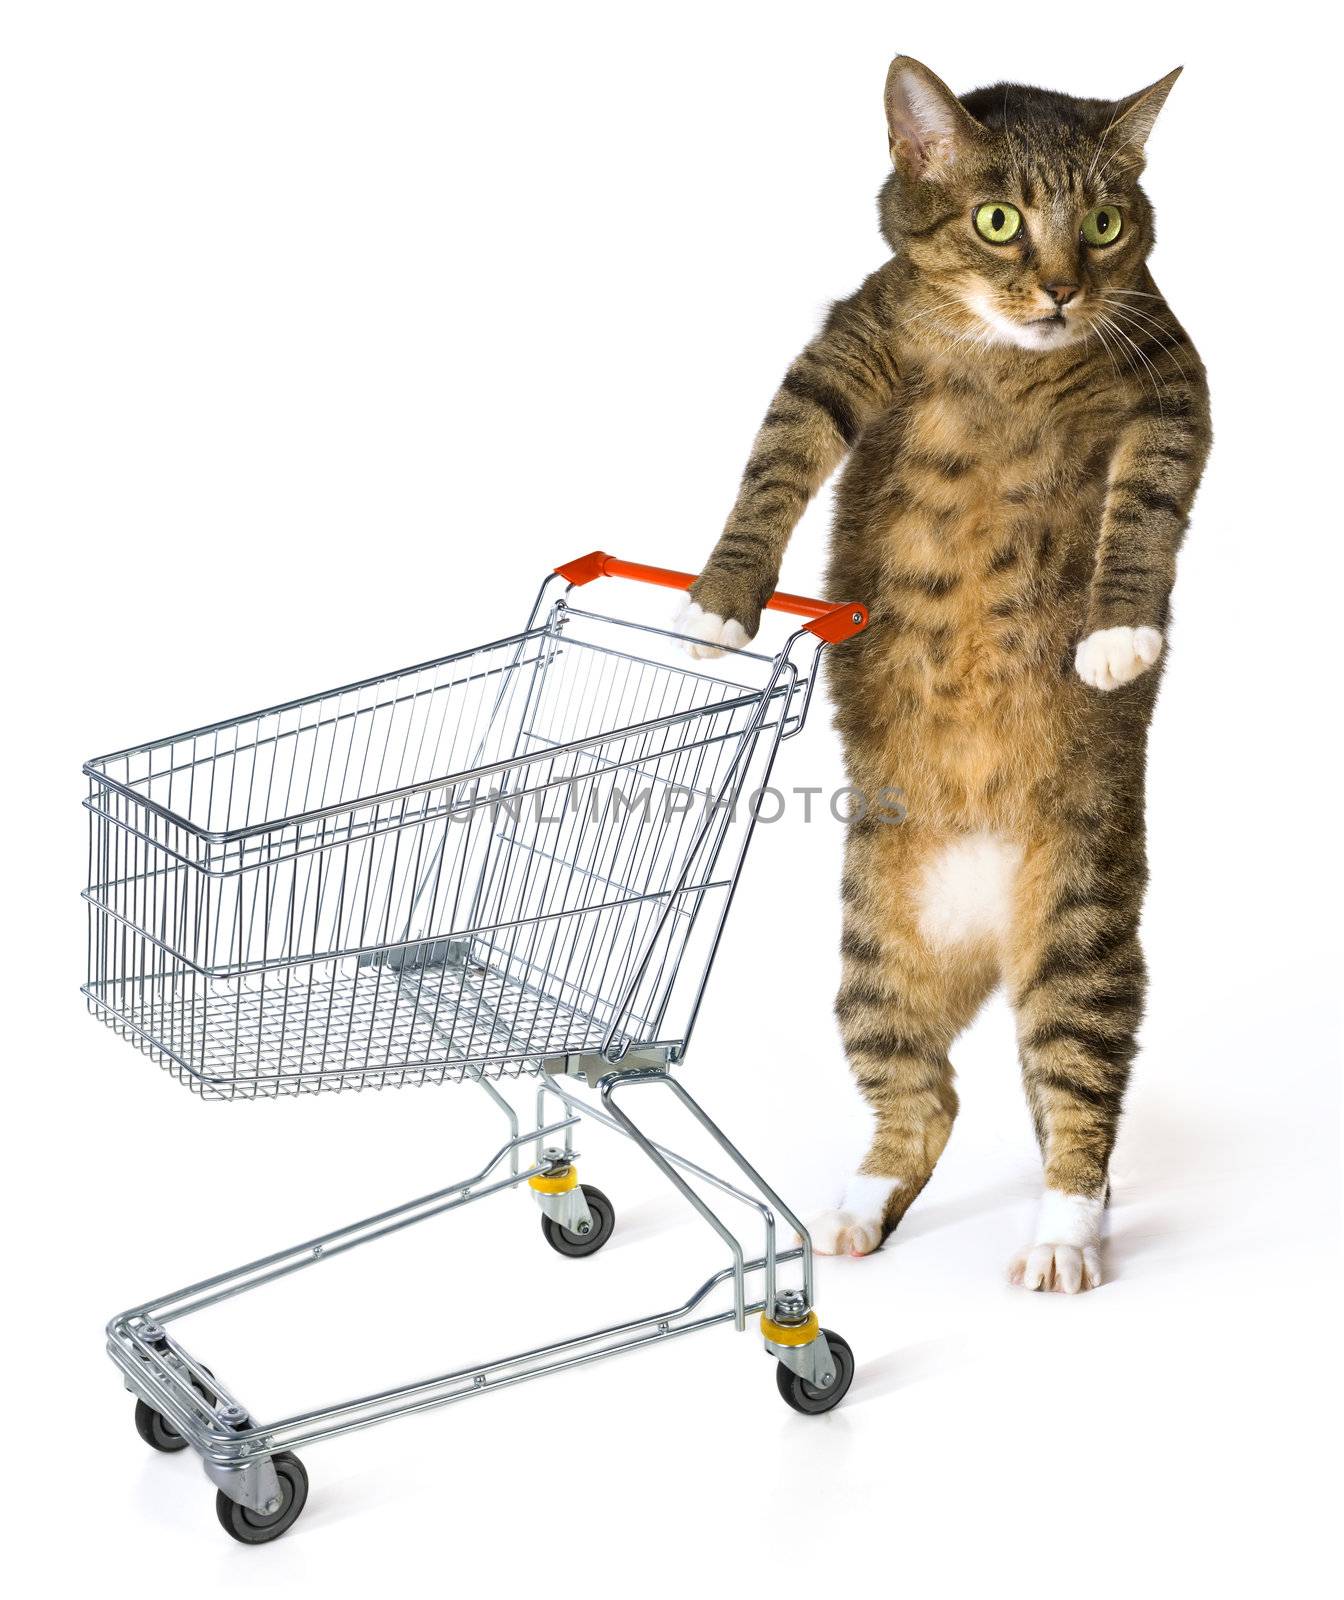 consumer cat by ssuaphoto